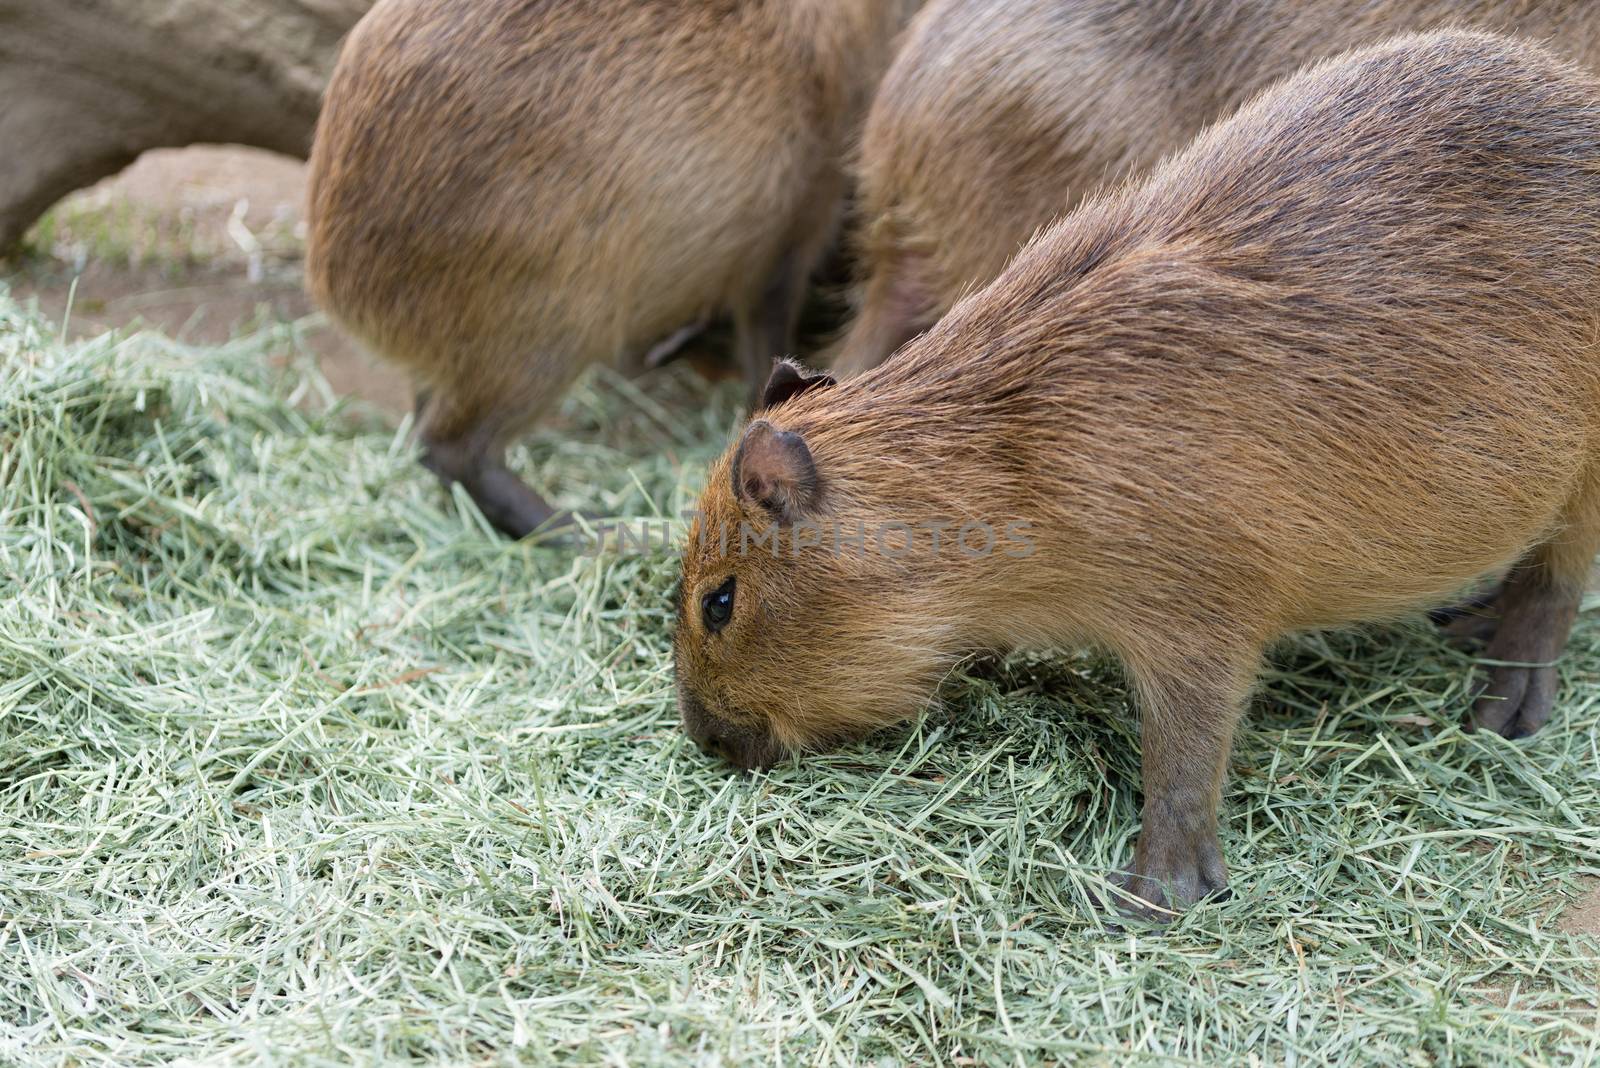 A few capybaras eating dried grass.